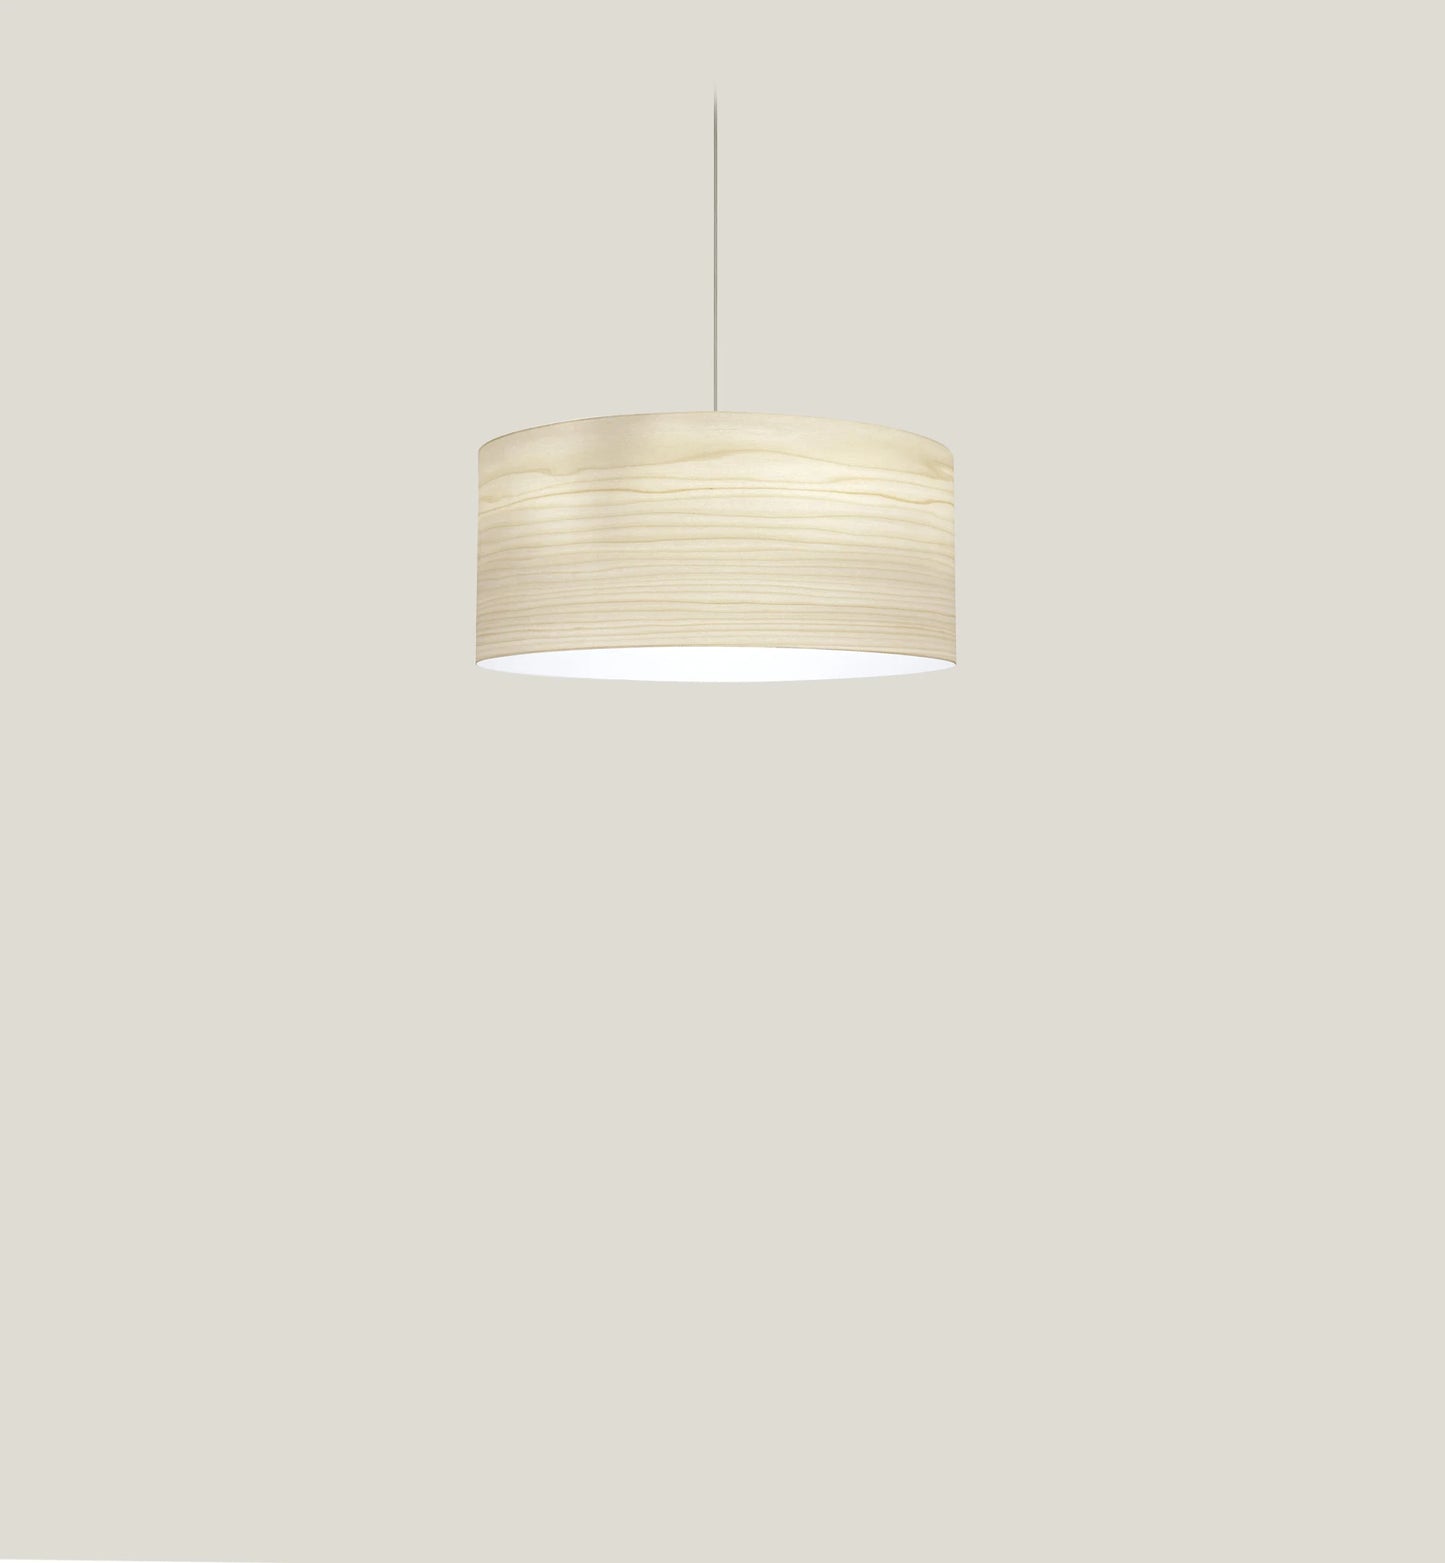 natural veneer wood pendant lamp. best lamps, wooden suspended light, bedside lamps, white